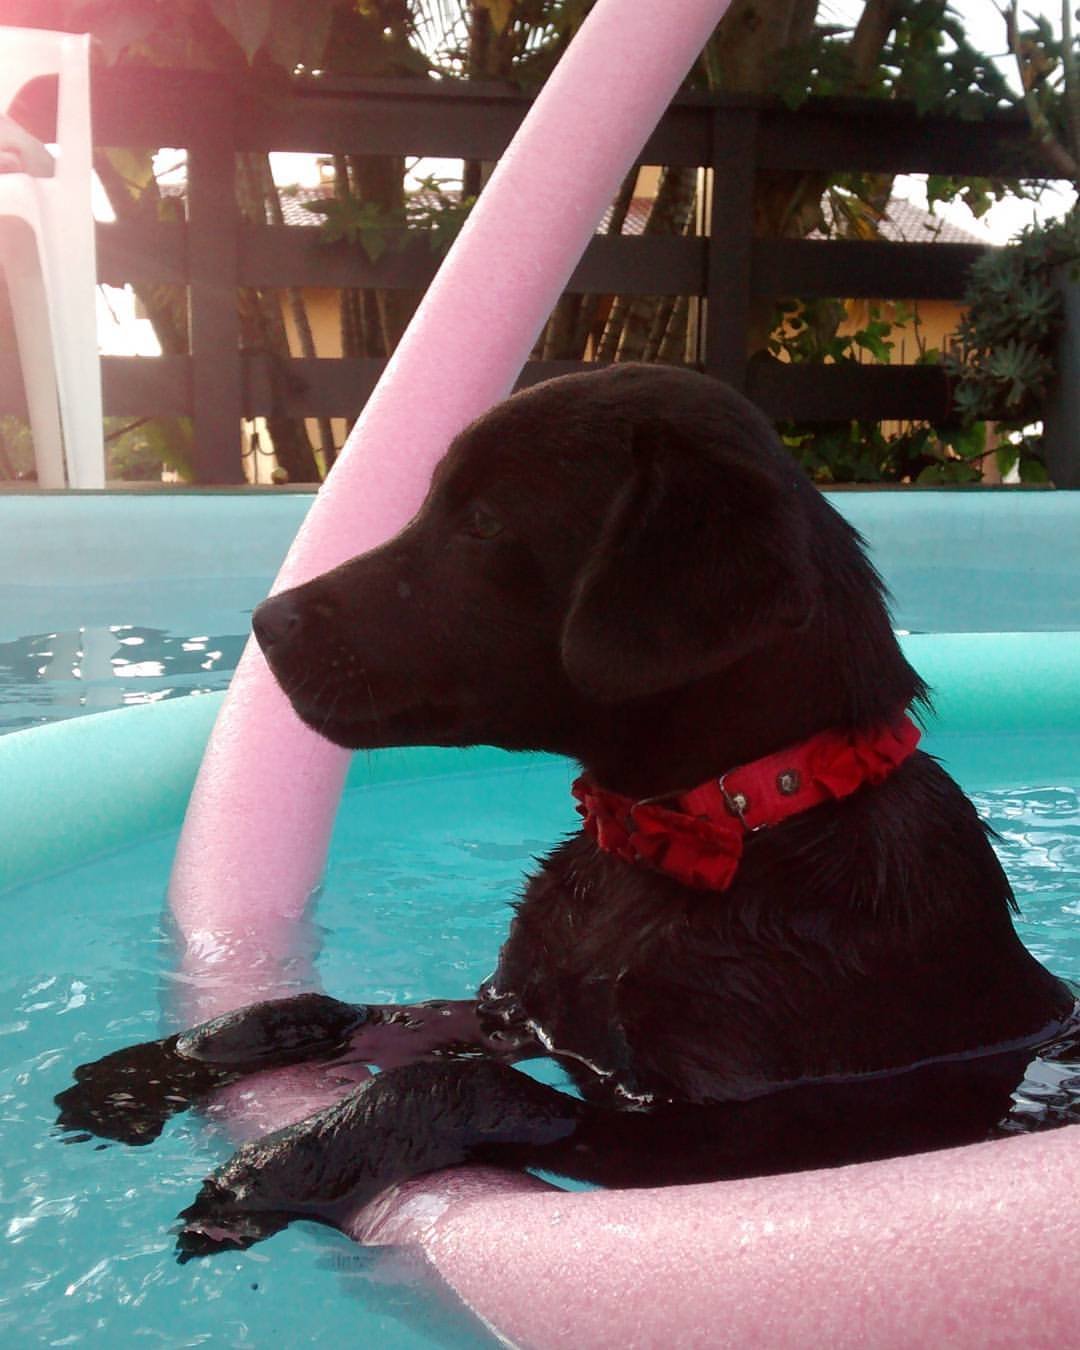 Lana in the pool